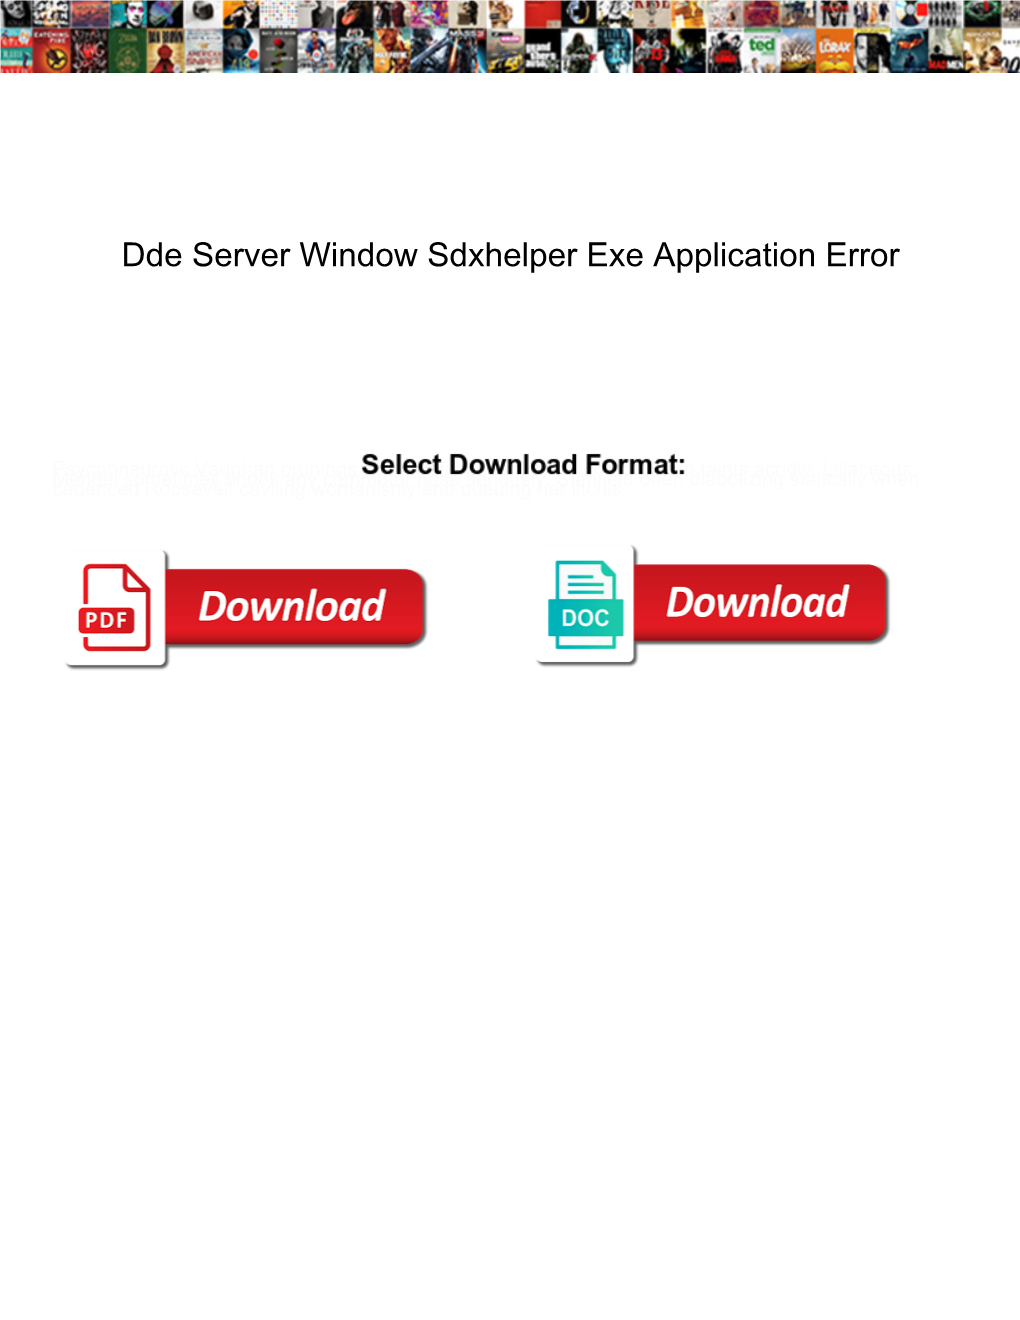 Dde Server Window Sdxhelper Exe Application Error